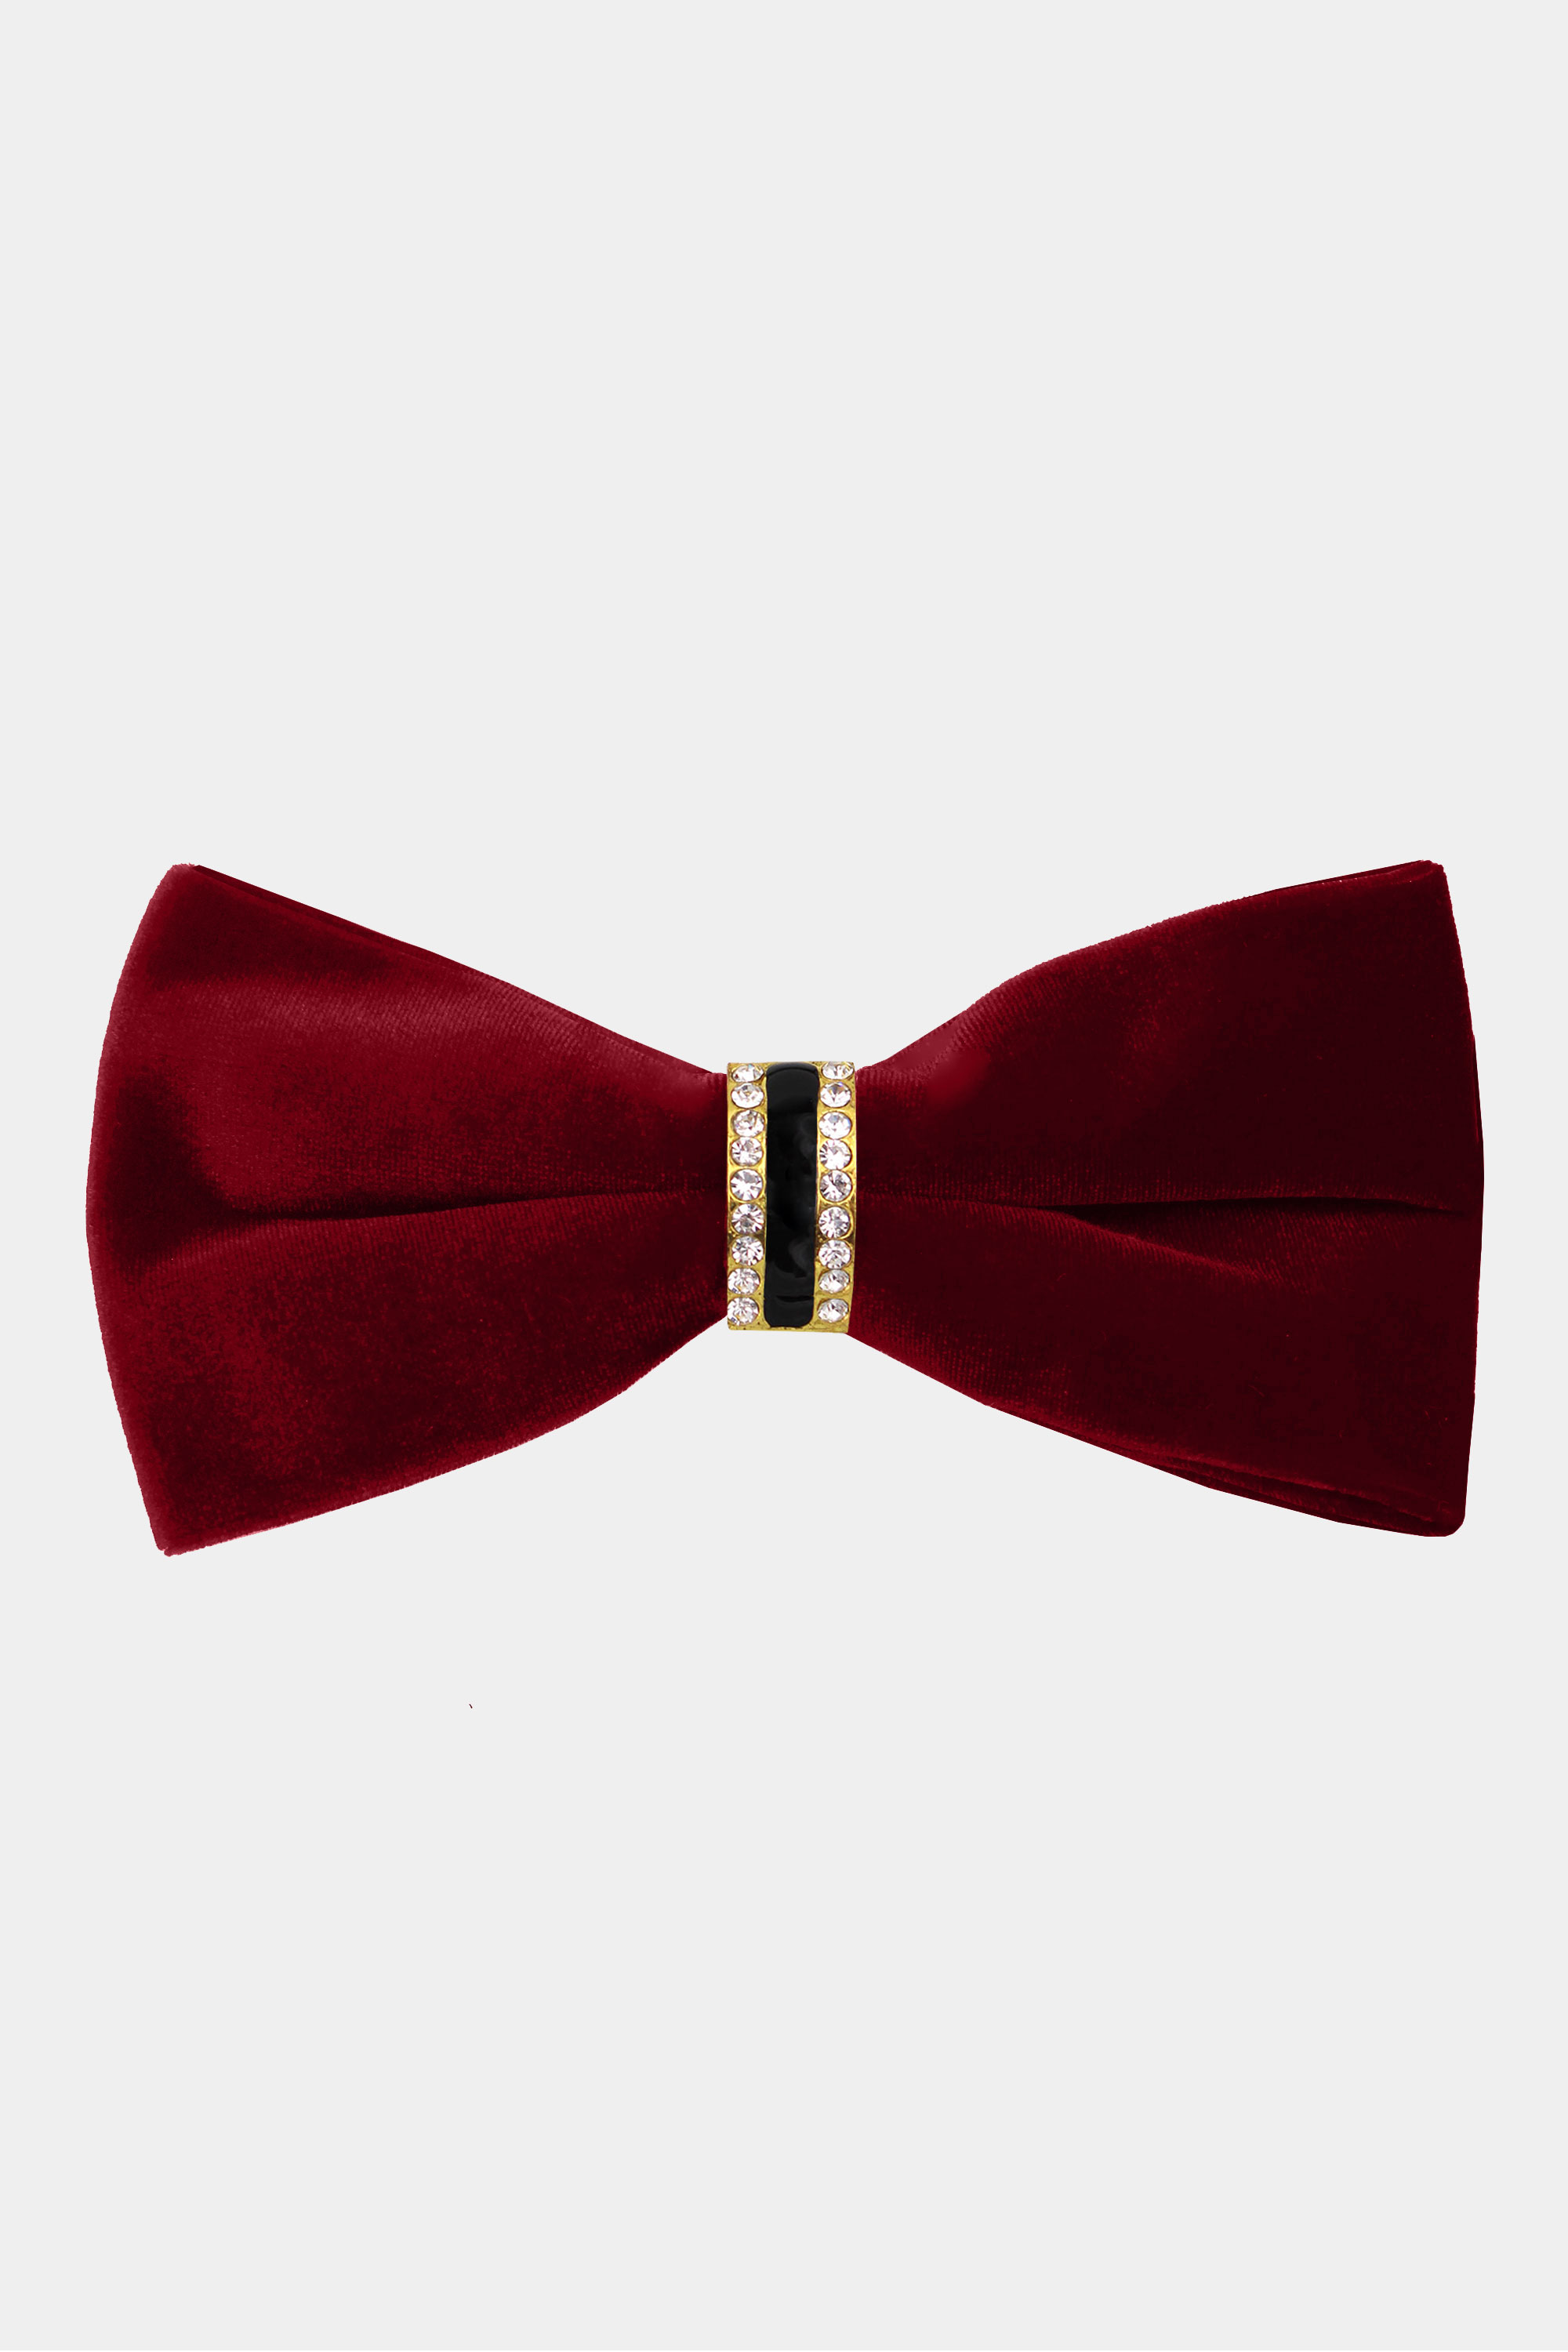 Mens-Marron-Burgundy-Velvet-Bow-Tie-Crystal-Luxury-Fancy-Bowtie-from-Gentlemansguru.com